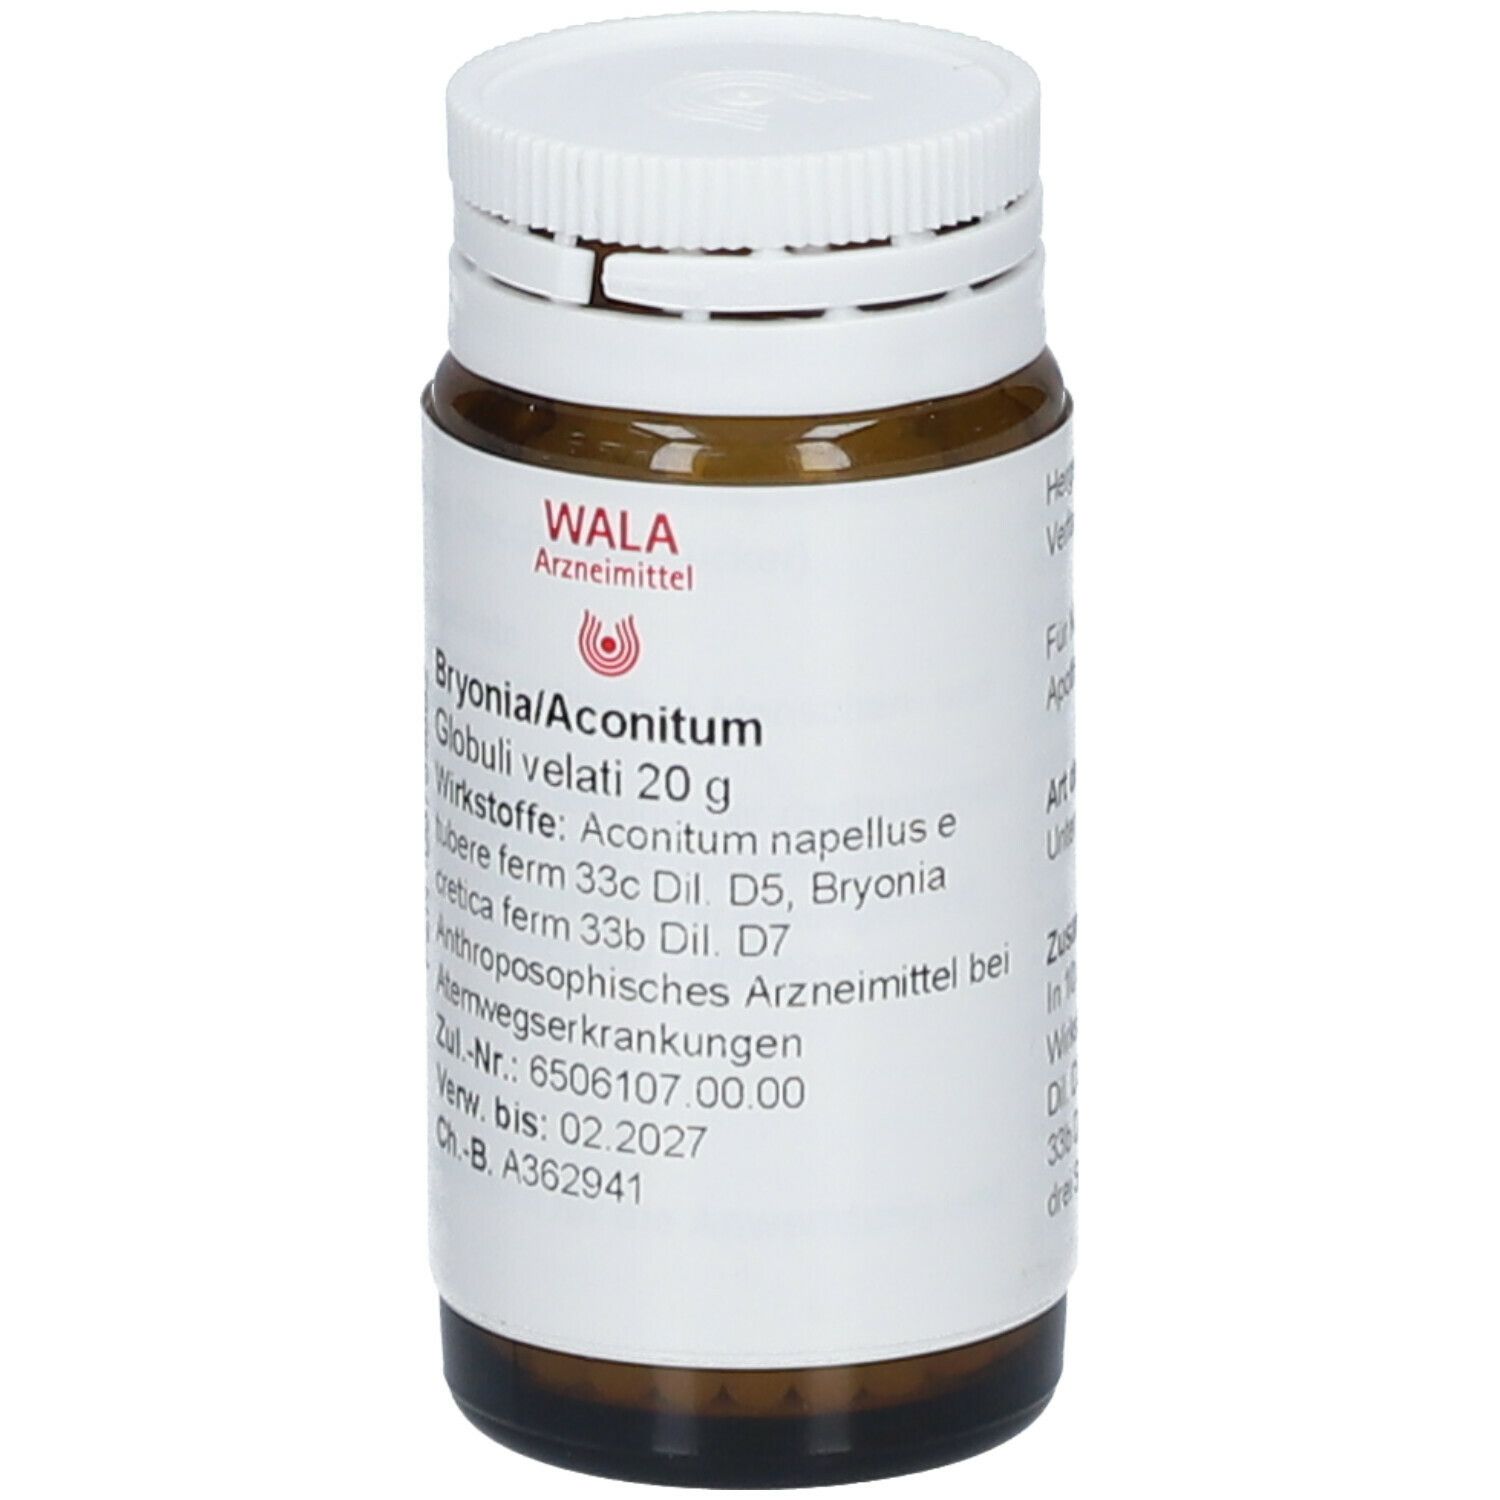 WALA® Bryonia Aconitum Globuli